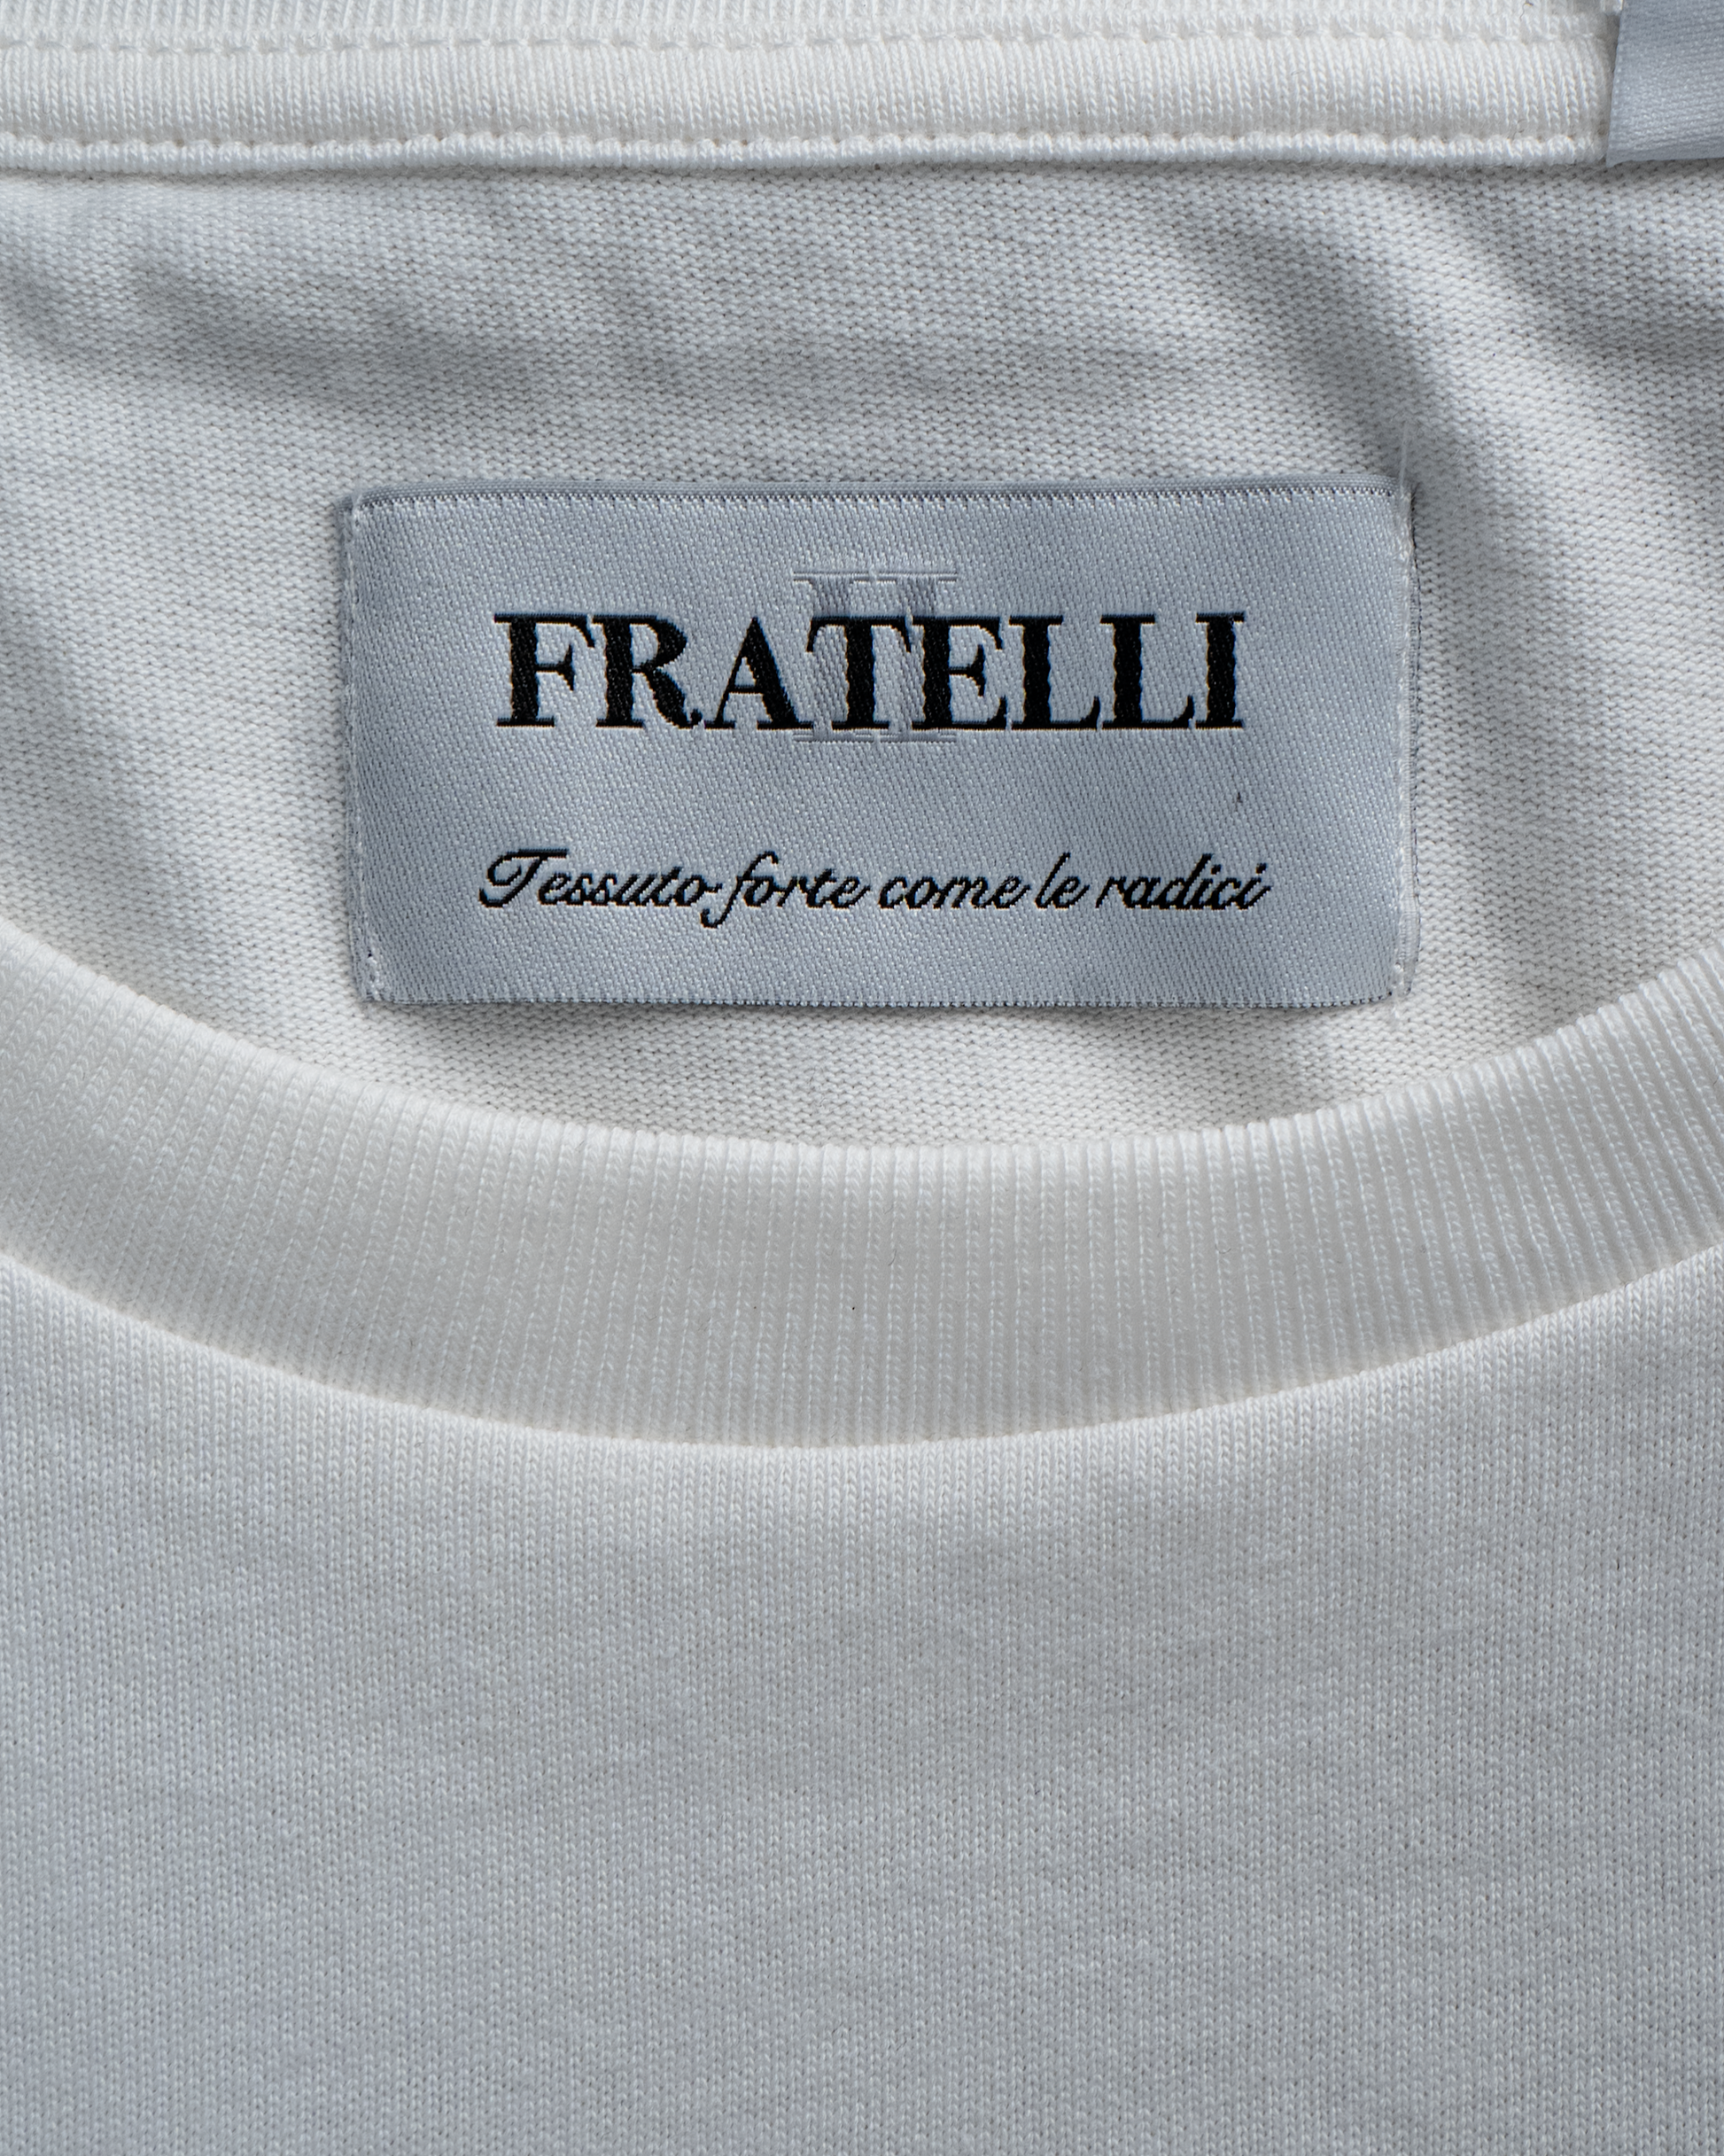 2FRATELLI Regular T-Shirt weiss men (unisex) - 2FRATELLI